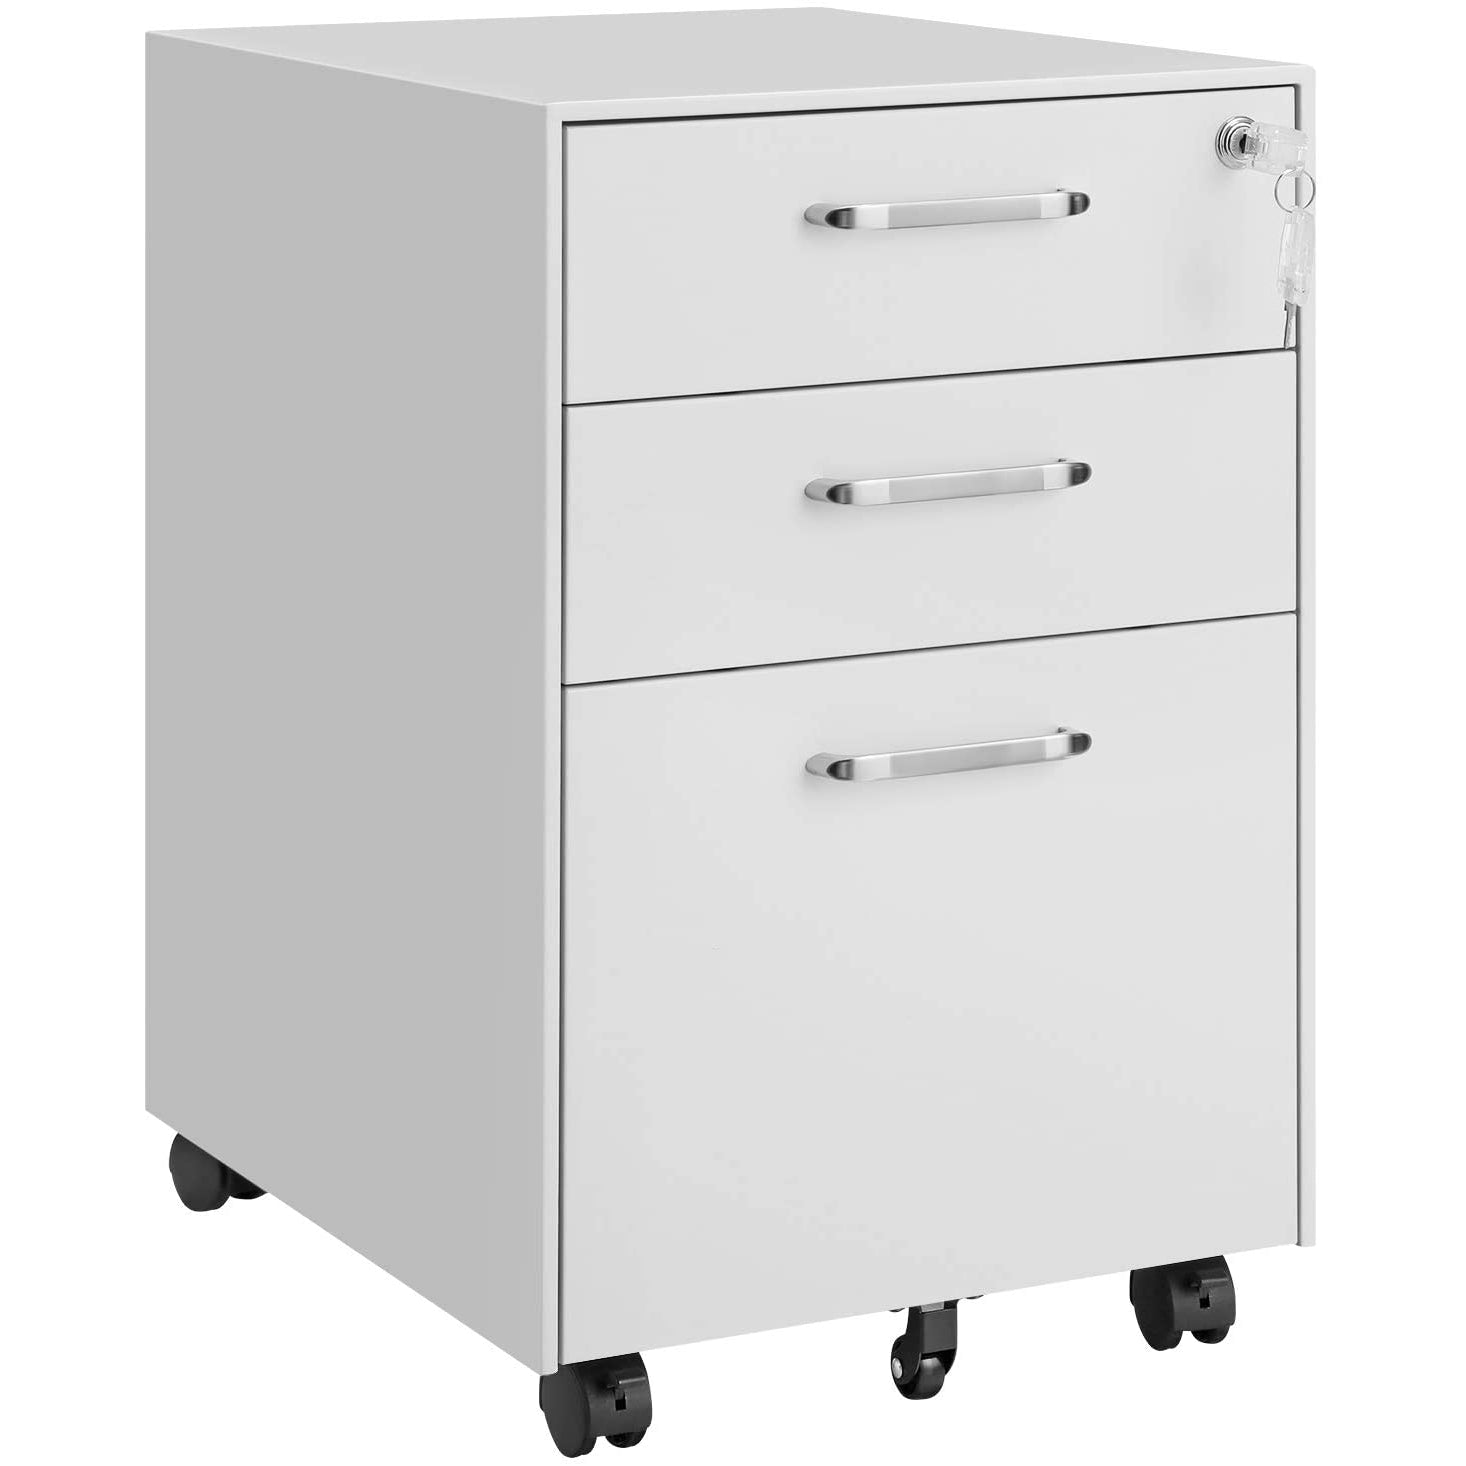 Nancy's Cheltenham Drawer Unit - Filing Cabinet - Storage Cabinet - On Wheels - 3 Drawers - Storage Space - White - Steel - 39 x 48 x 60 cm 33 x 38 x 63 cm 